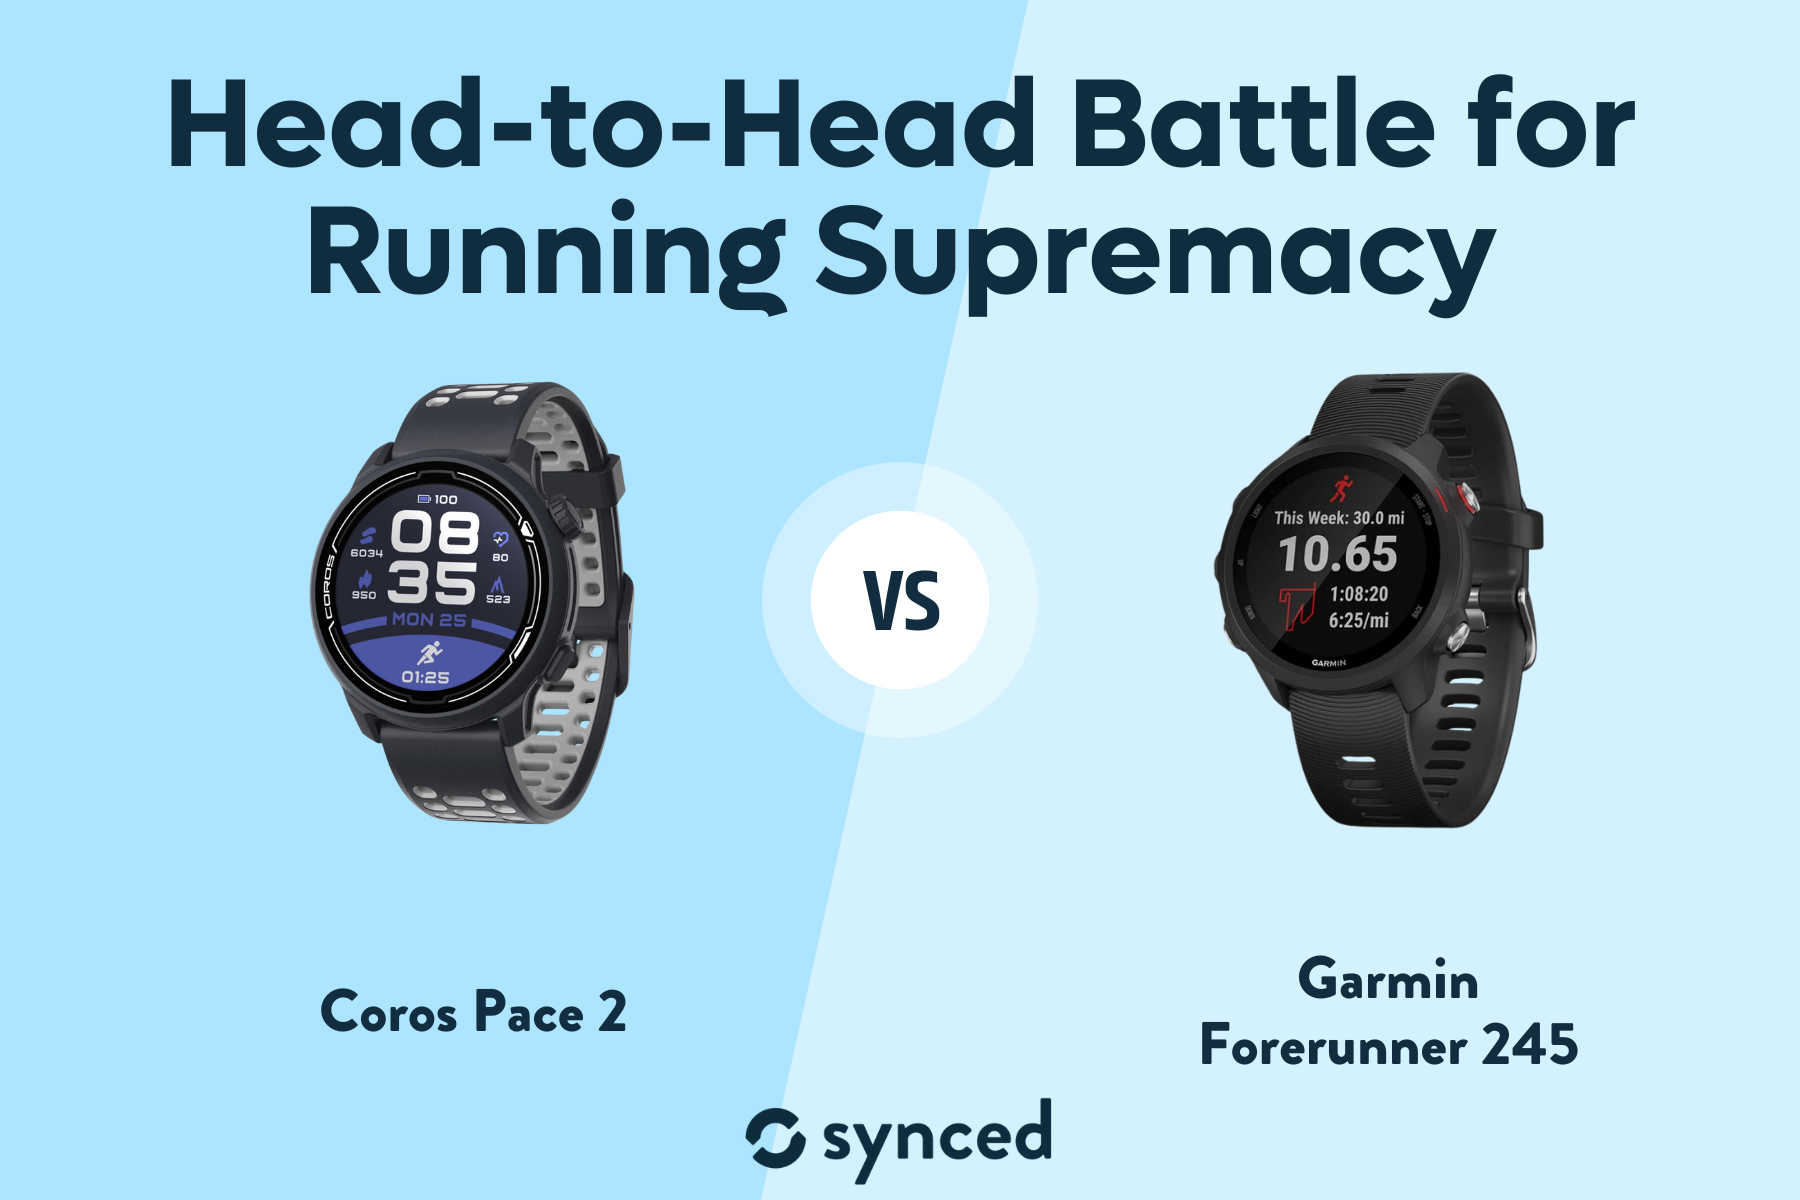 Coros Pace 2 vs Garmin Forerunner 245: Head-to-Head Battle for Running Supremacy